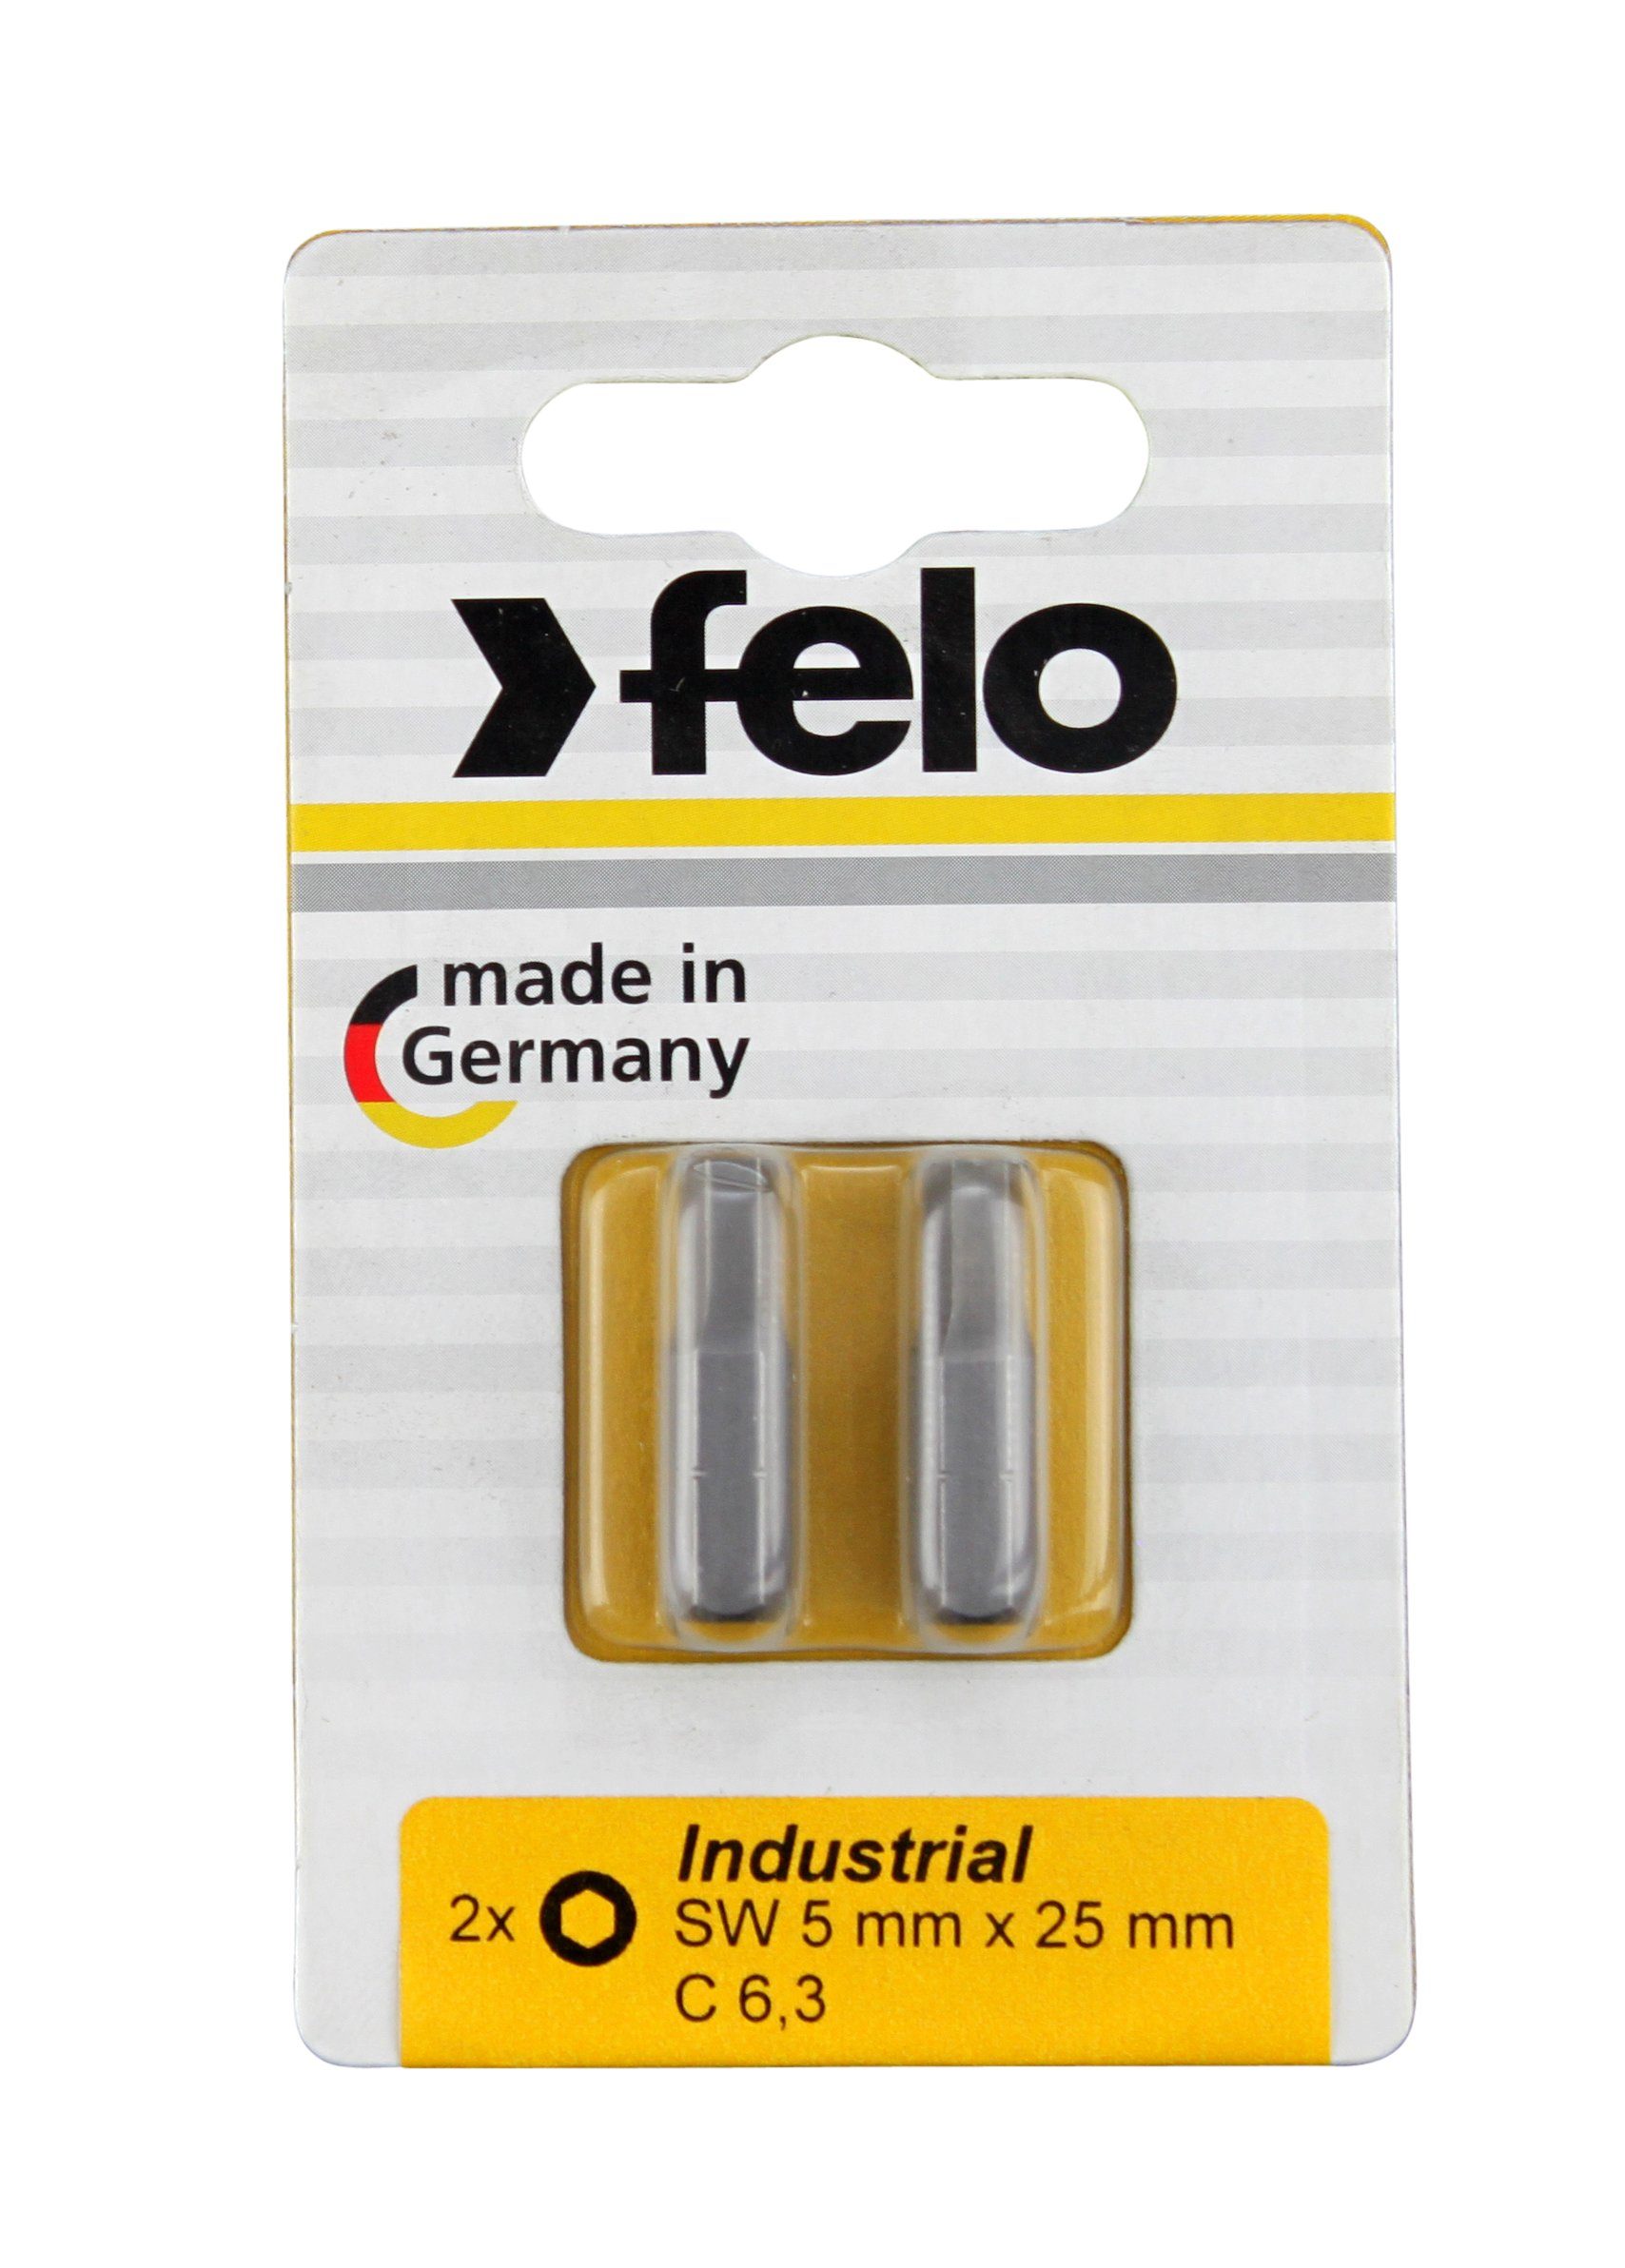 Felo Sechskant-Bit Felo Bit, 2 6,3 C Karte 5,0mm x Stk Industrie 2x auf 25mm